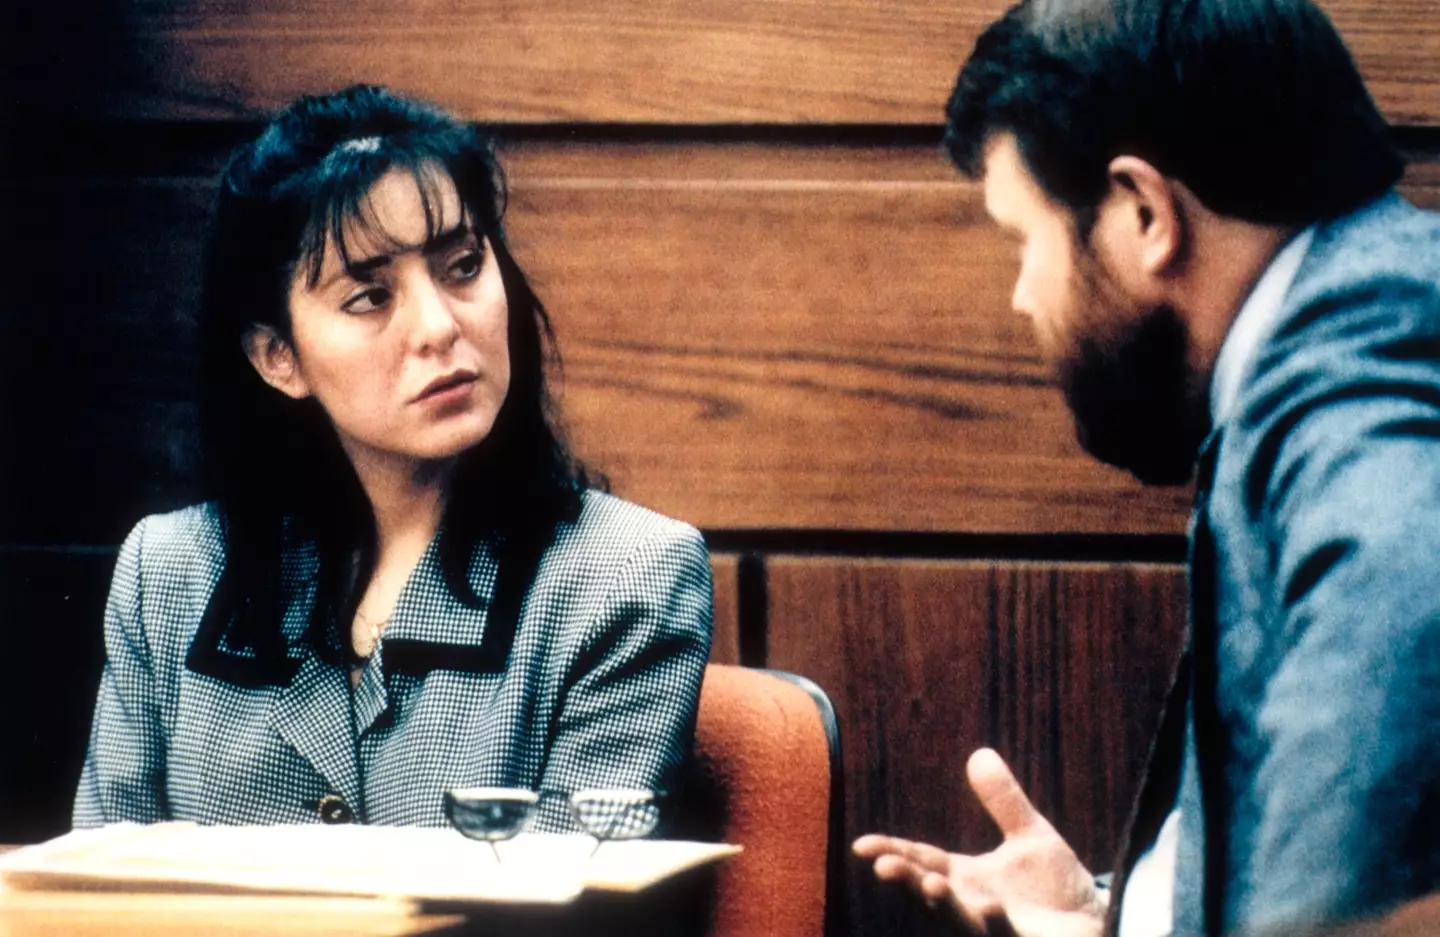 Lorena Bobbitt during the trial. (Jeffrey Markowitz/Sygma via Getty Images)